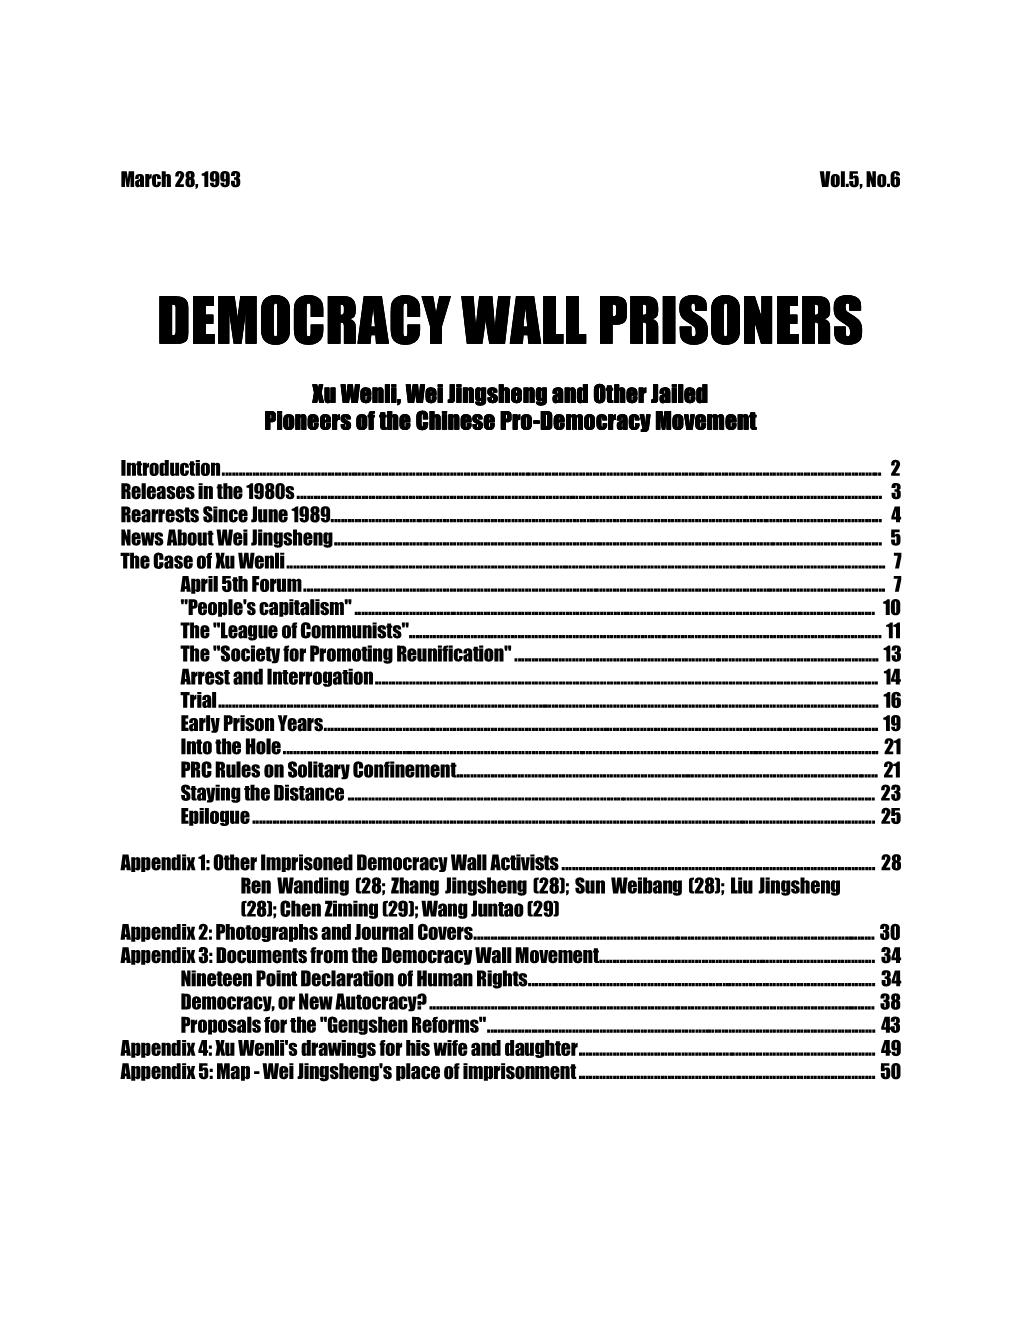 Democracy Wall Prisoners